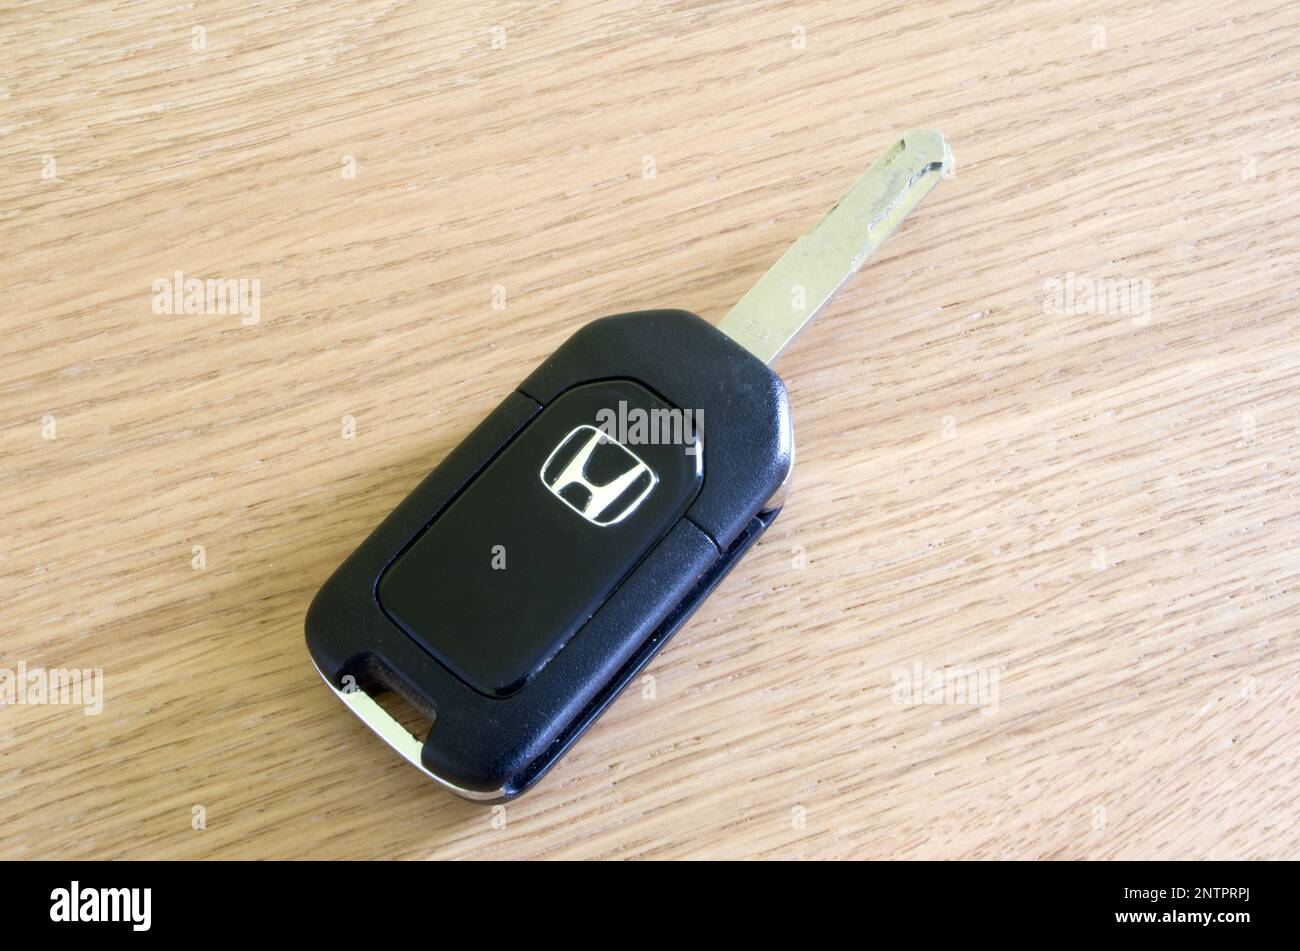 Honda Car Key Fob for Remote Control Central Locking On a 2017 Honda Civic Stock Photo